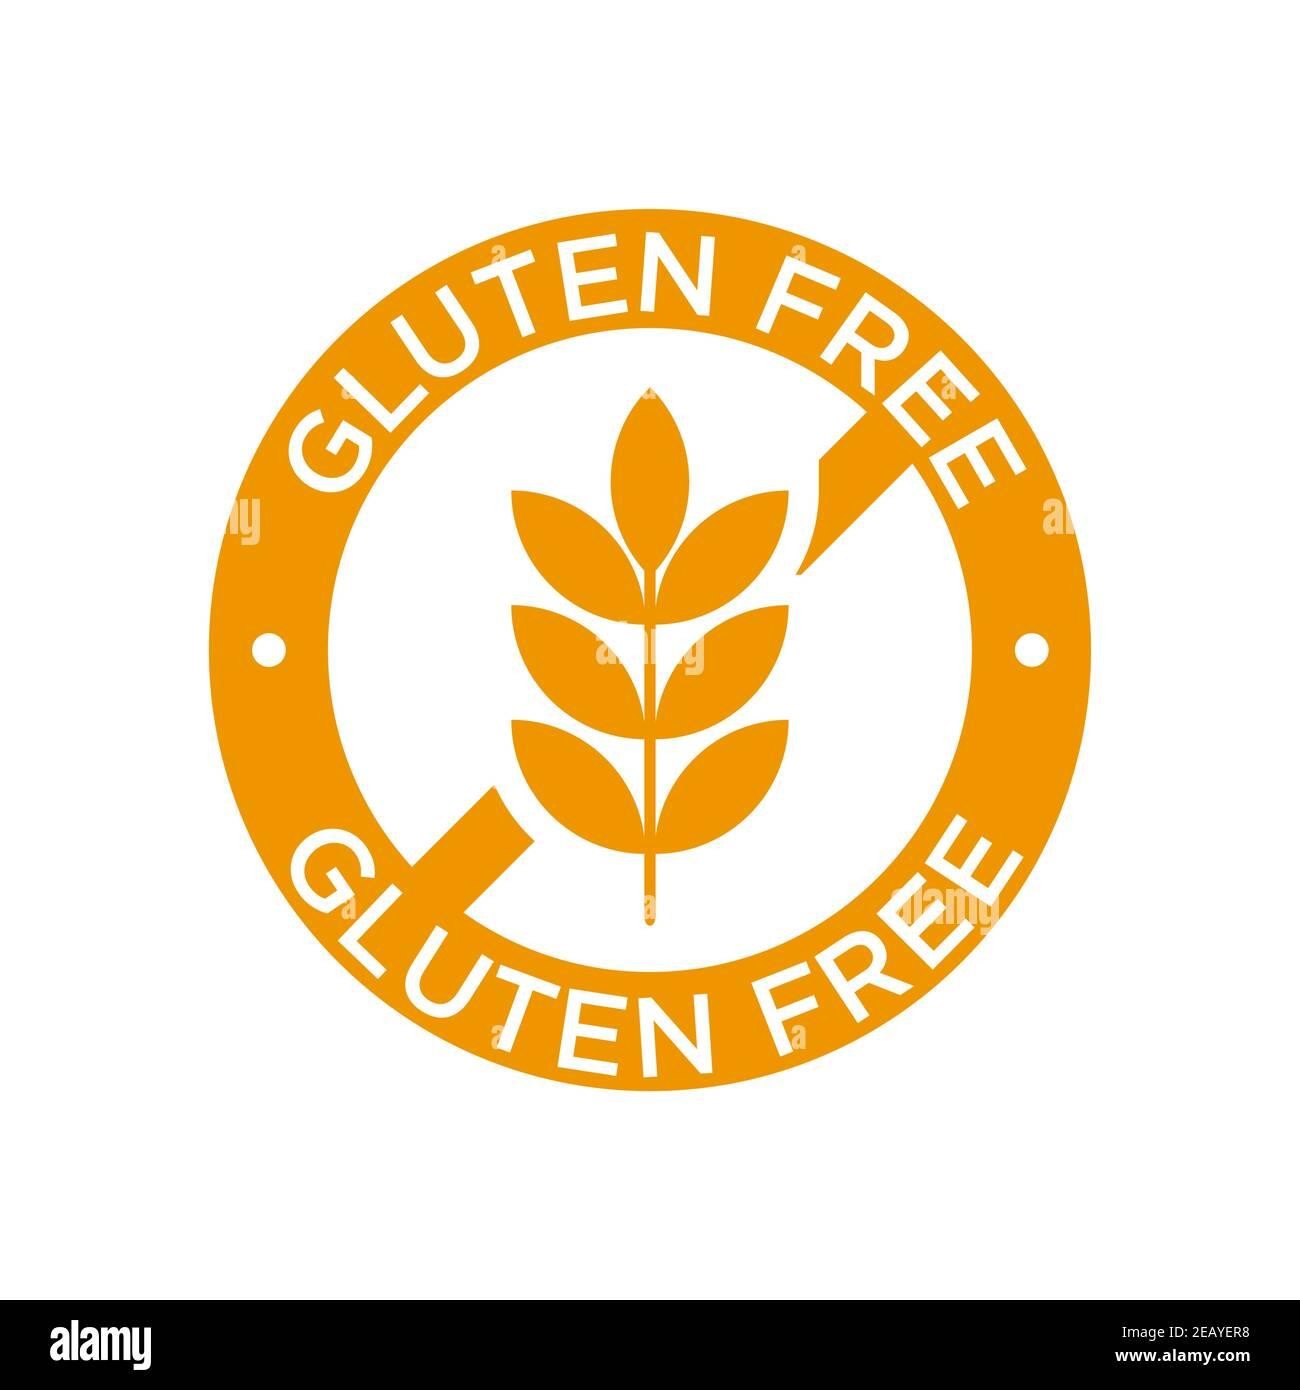 Gluten-Free Pastry